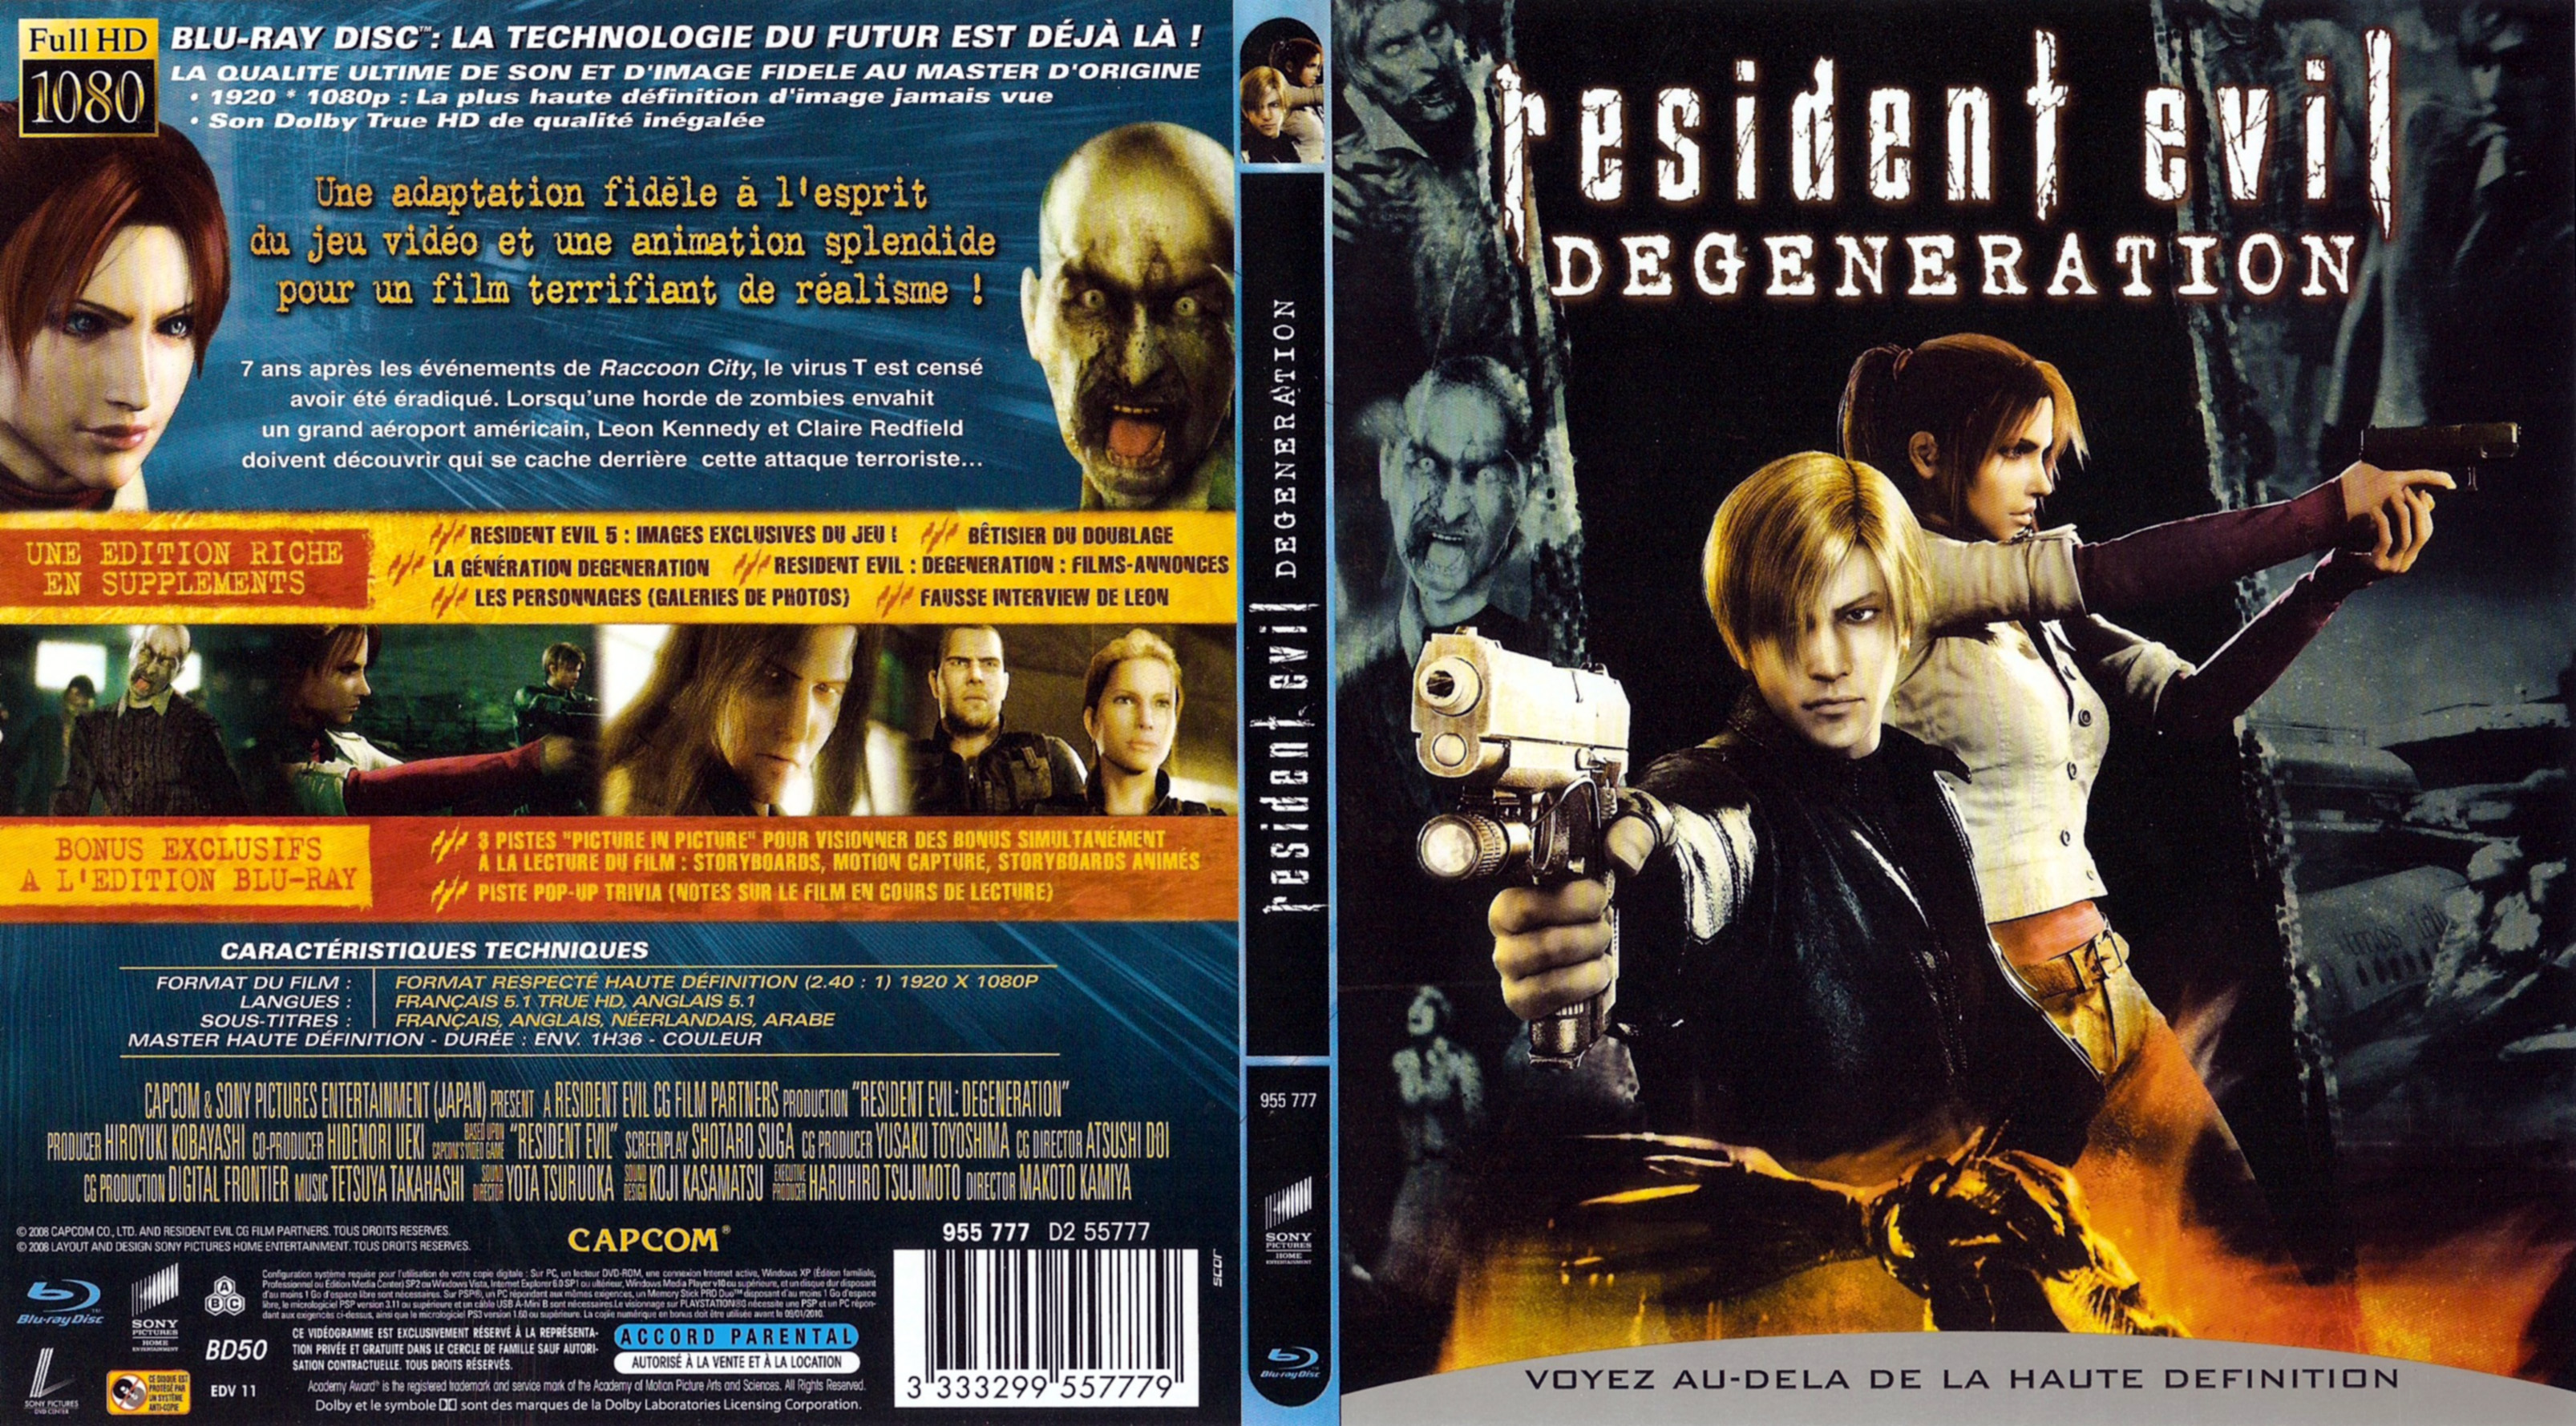 Jaquette DVD Resident Evil Degeneration (BLU-RAY)